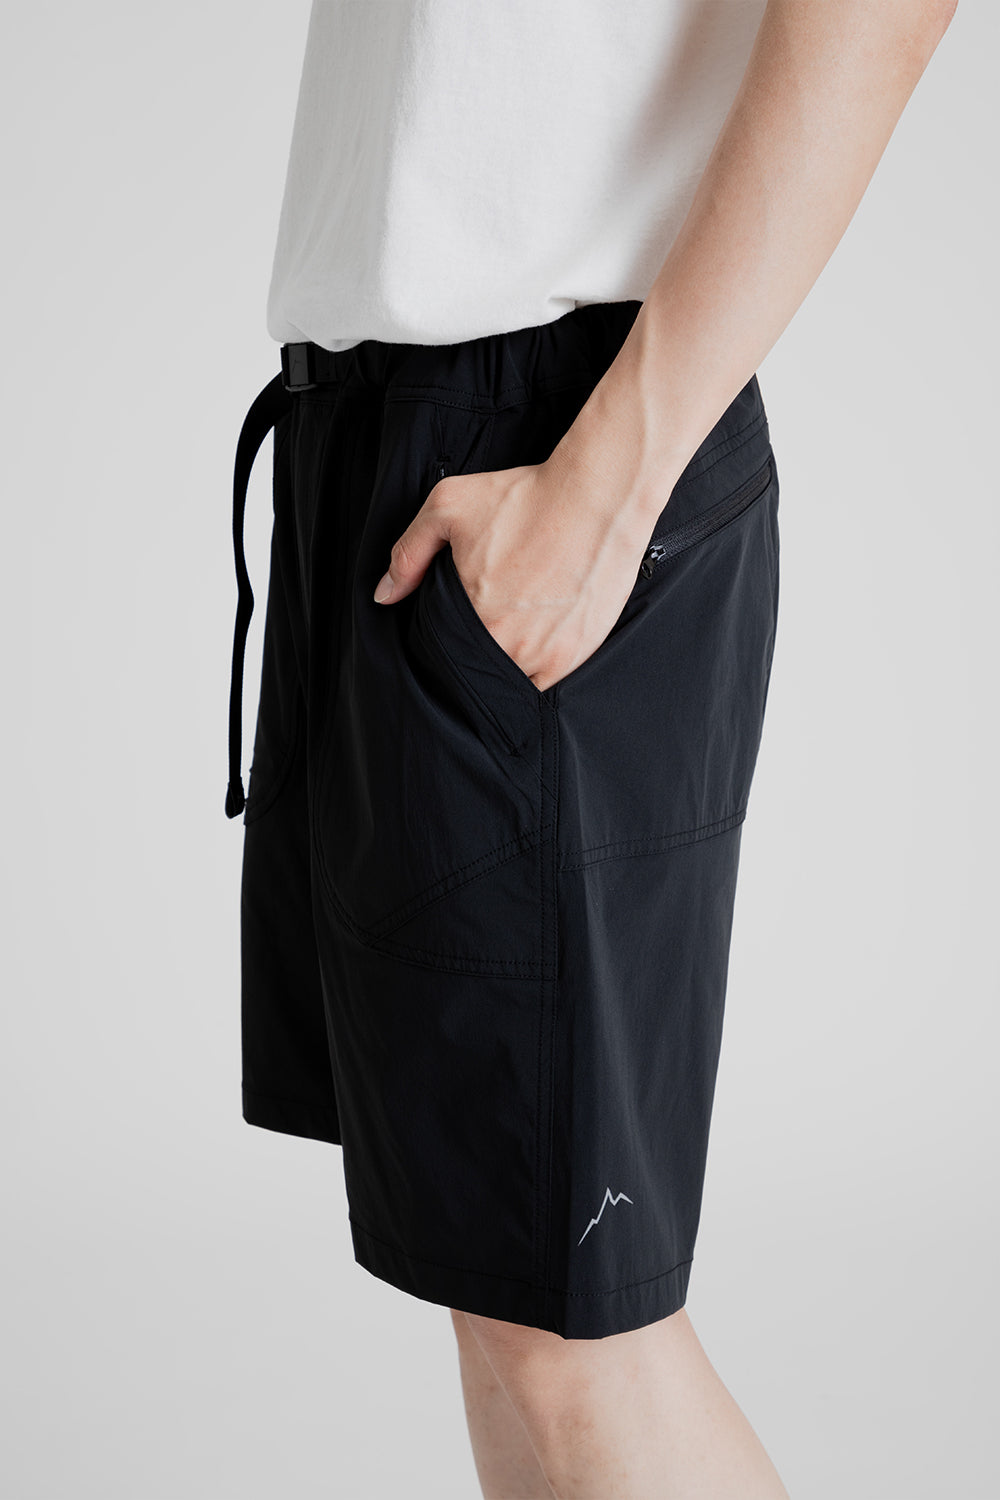 Cayl Nylon Limber Shorts in Black